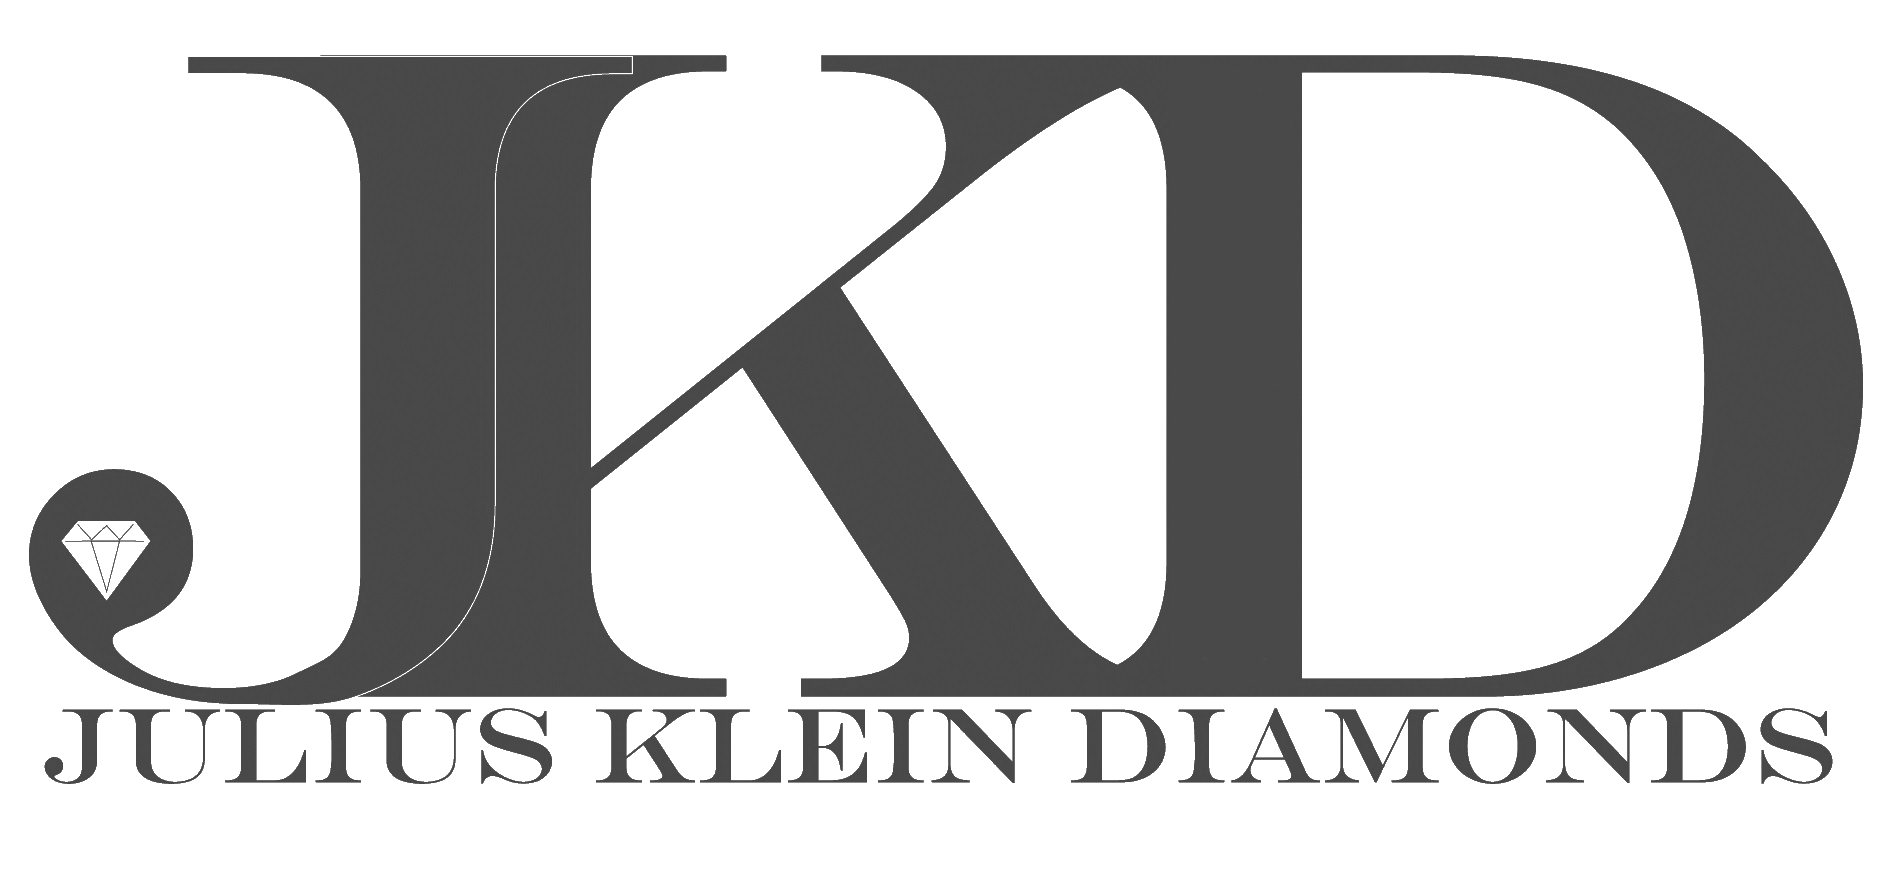 Julius Klein Group: The Brand Behind the Brand